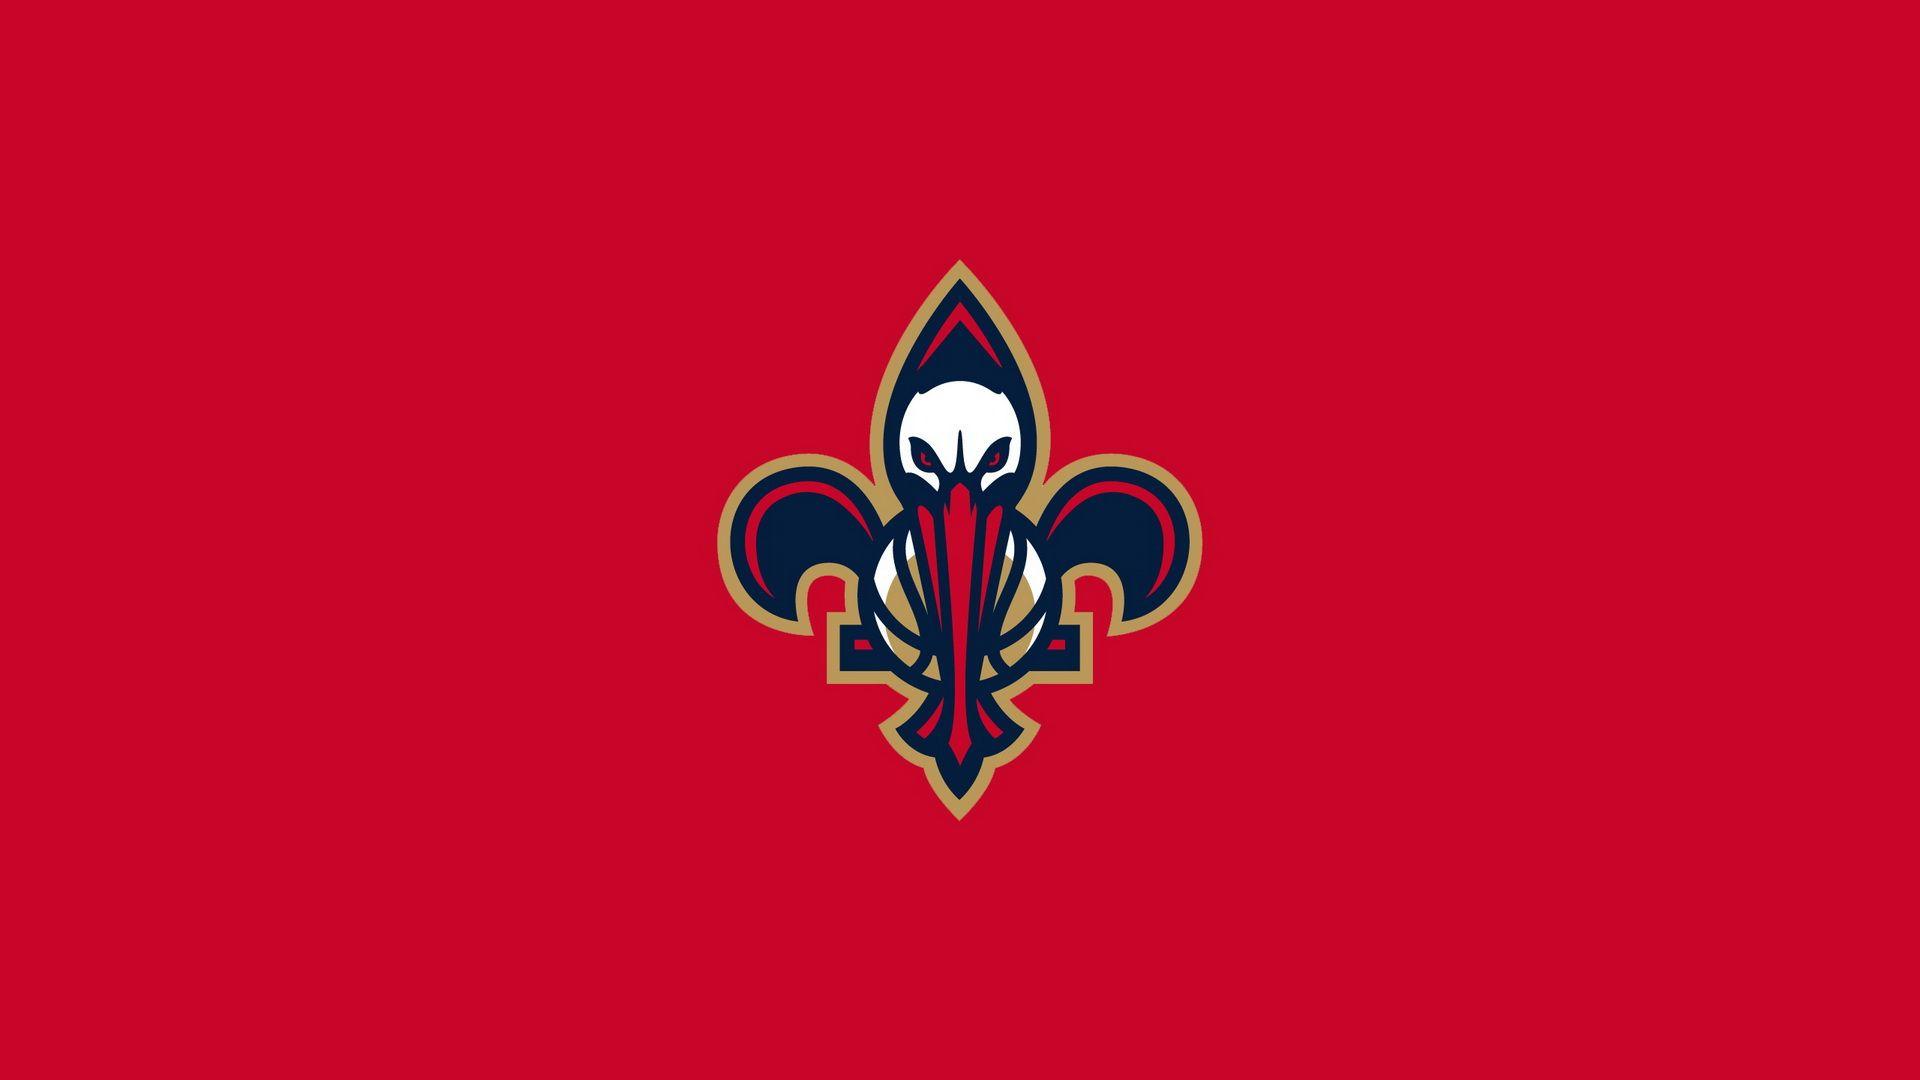 New Orleans Pelicans. Full HD Widescreen wallpaper